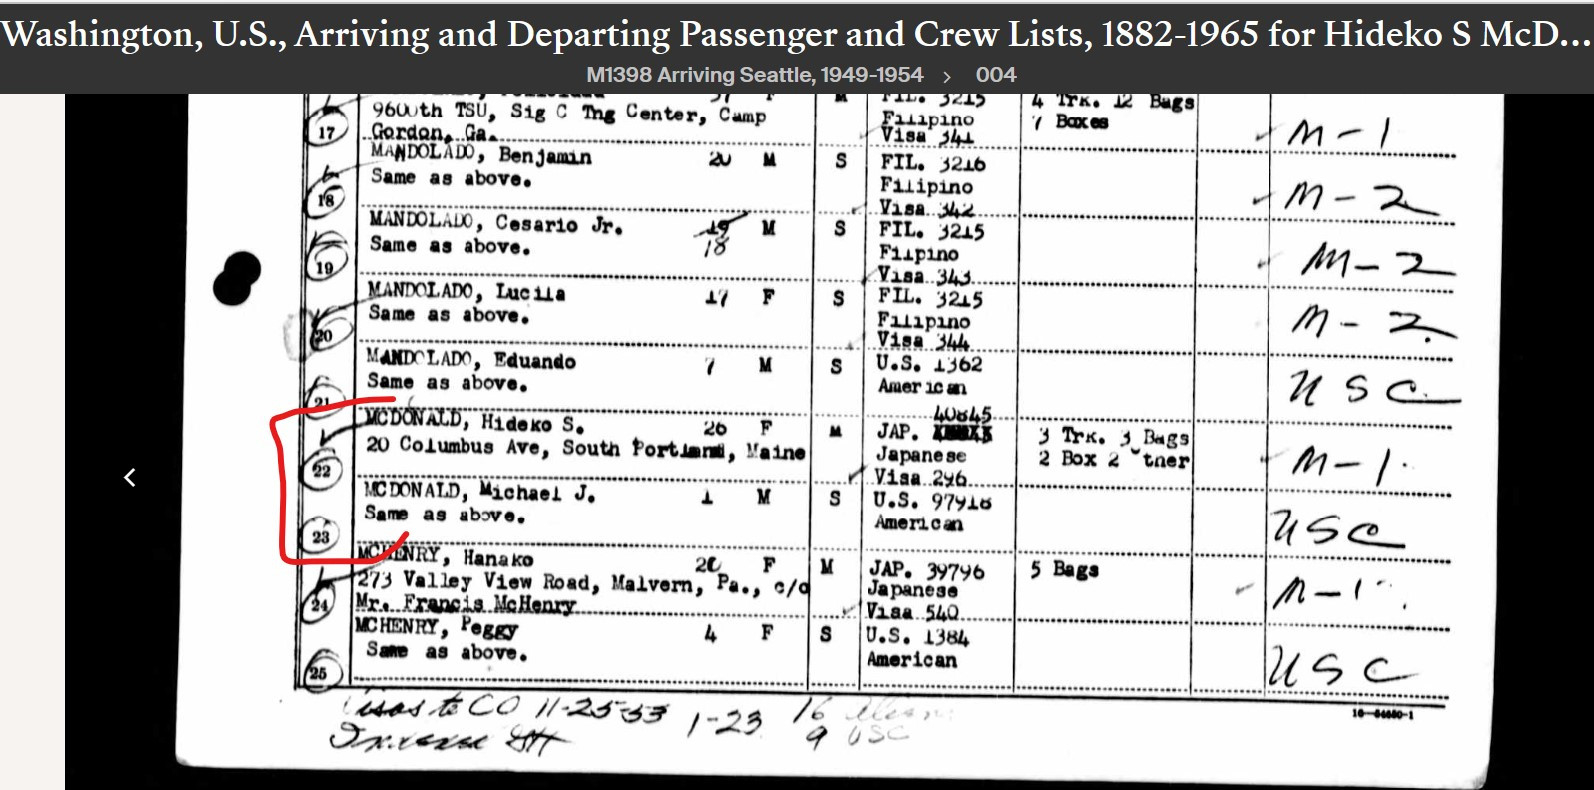 Hideko Sasaki-McDonald--Washington, U.S., Arriving and Departing Passenger and Crew Lists, 1882-1965(1953) a